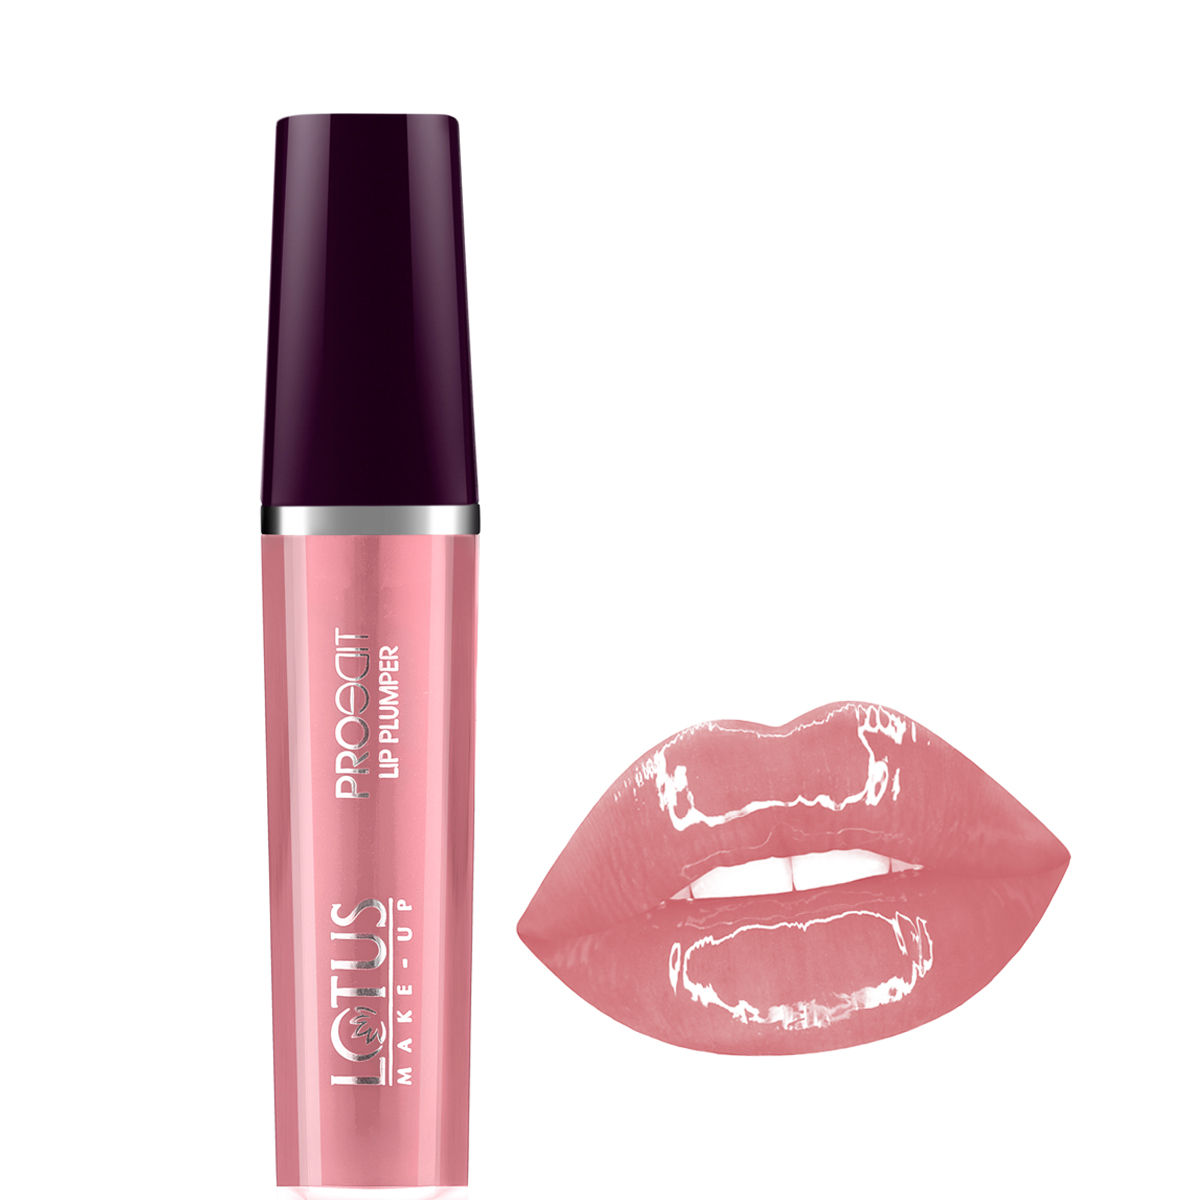 Buy Lotus Make-Up Proedit Lip Plumper Pure Peach Lp06 - Purplle